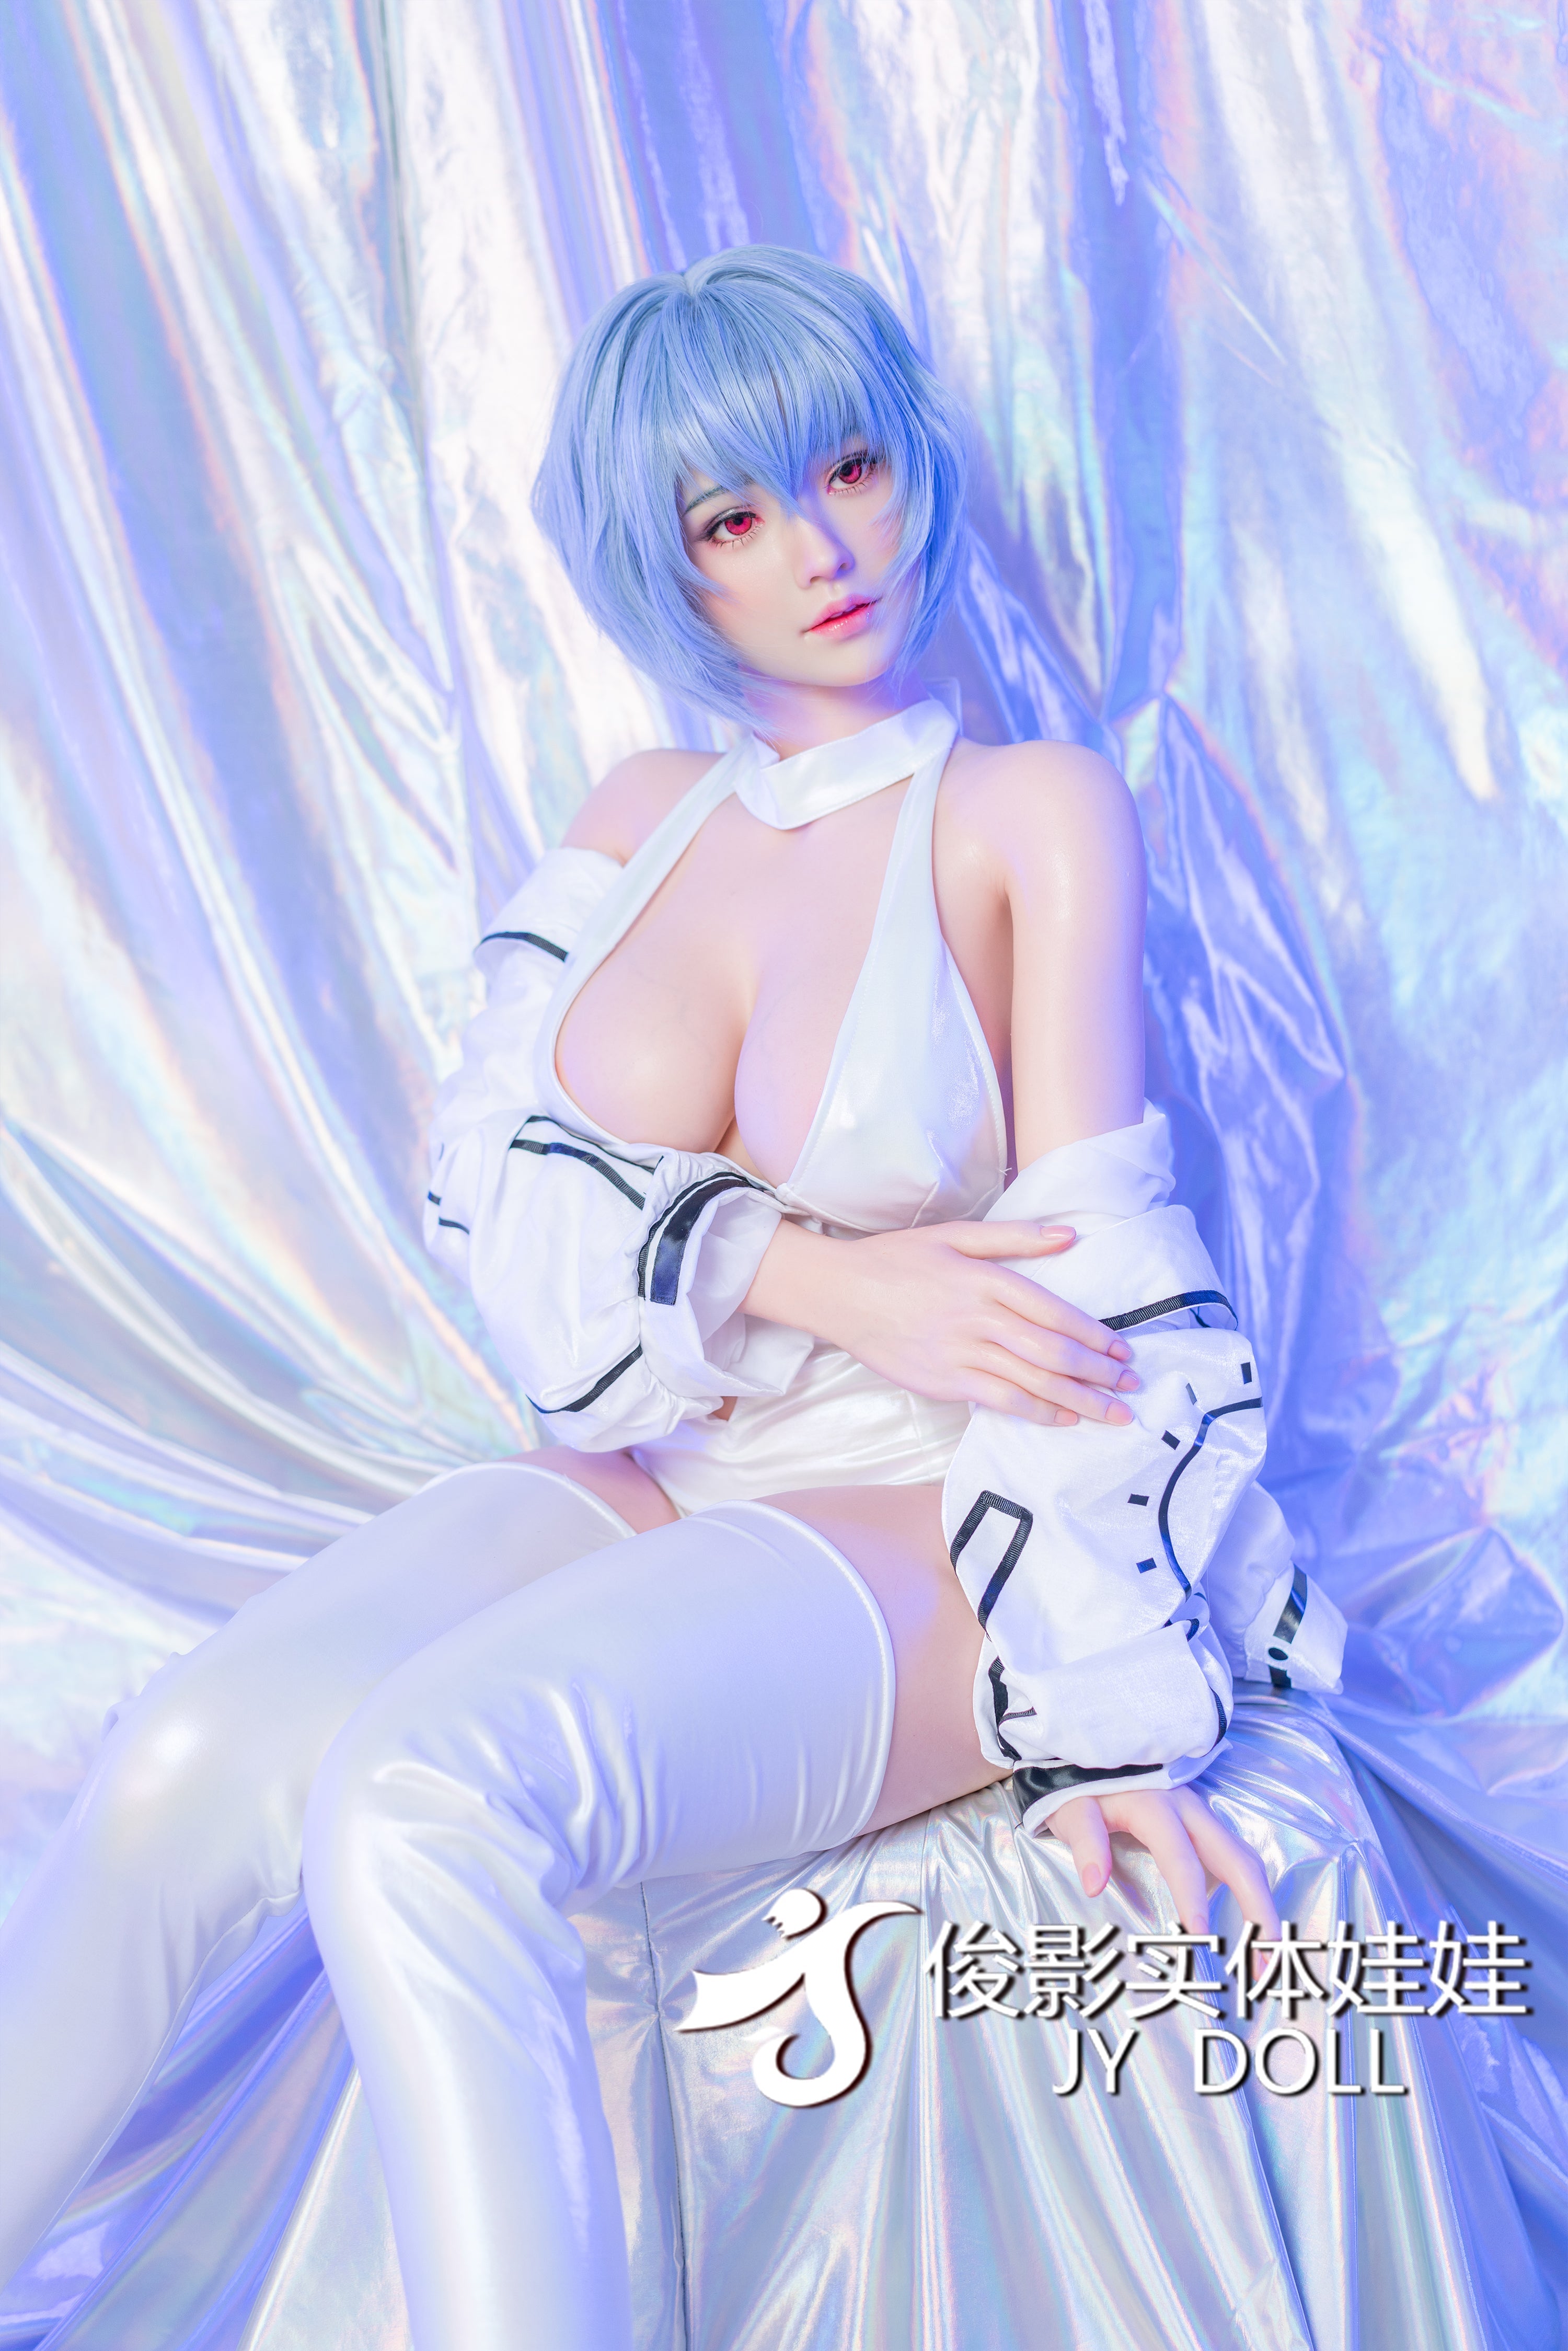 JY Doll 163 cm Silicone - Yanayaki (SG) | Buy Sex Dolls at DOLLS ACTUALLY